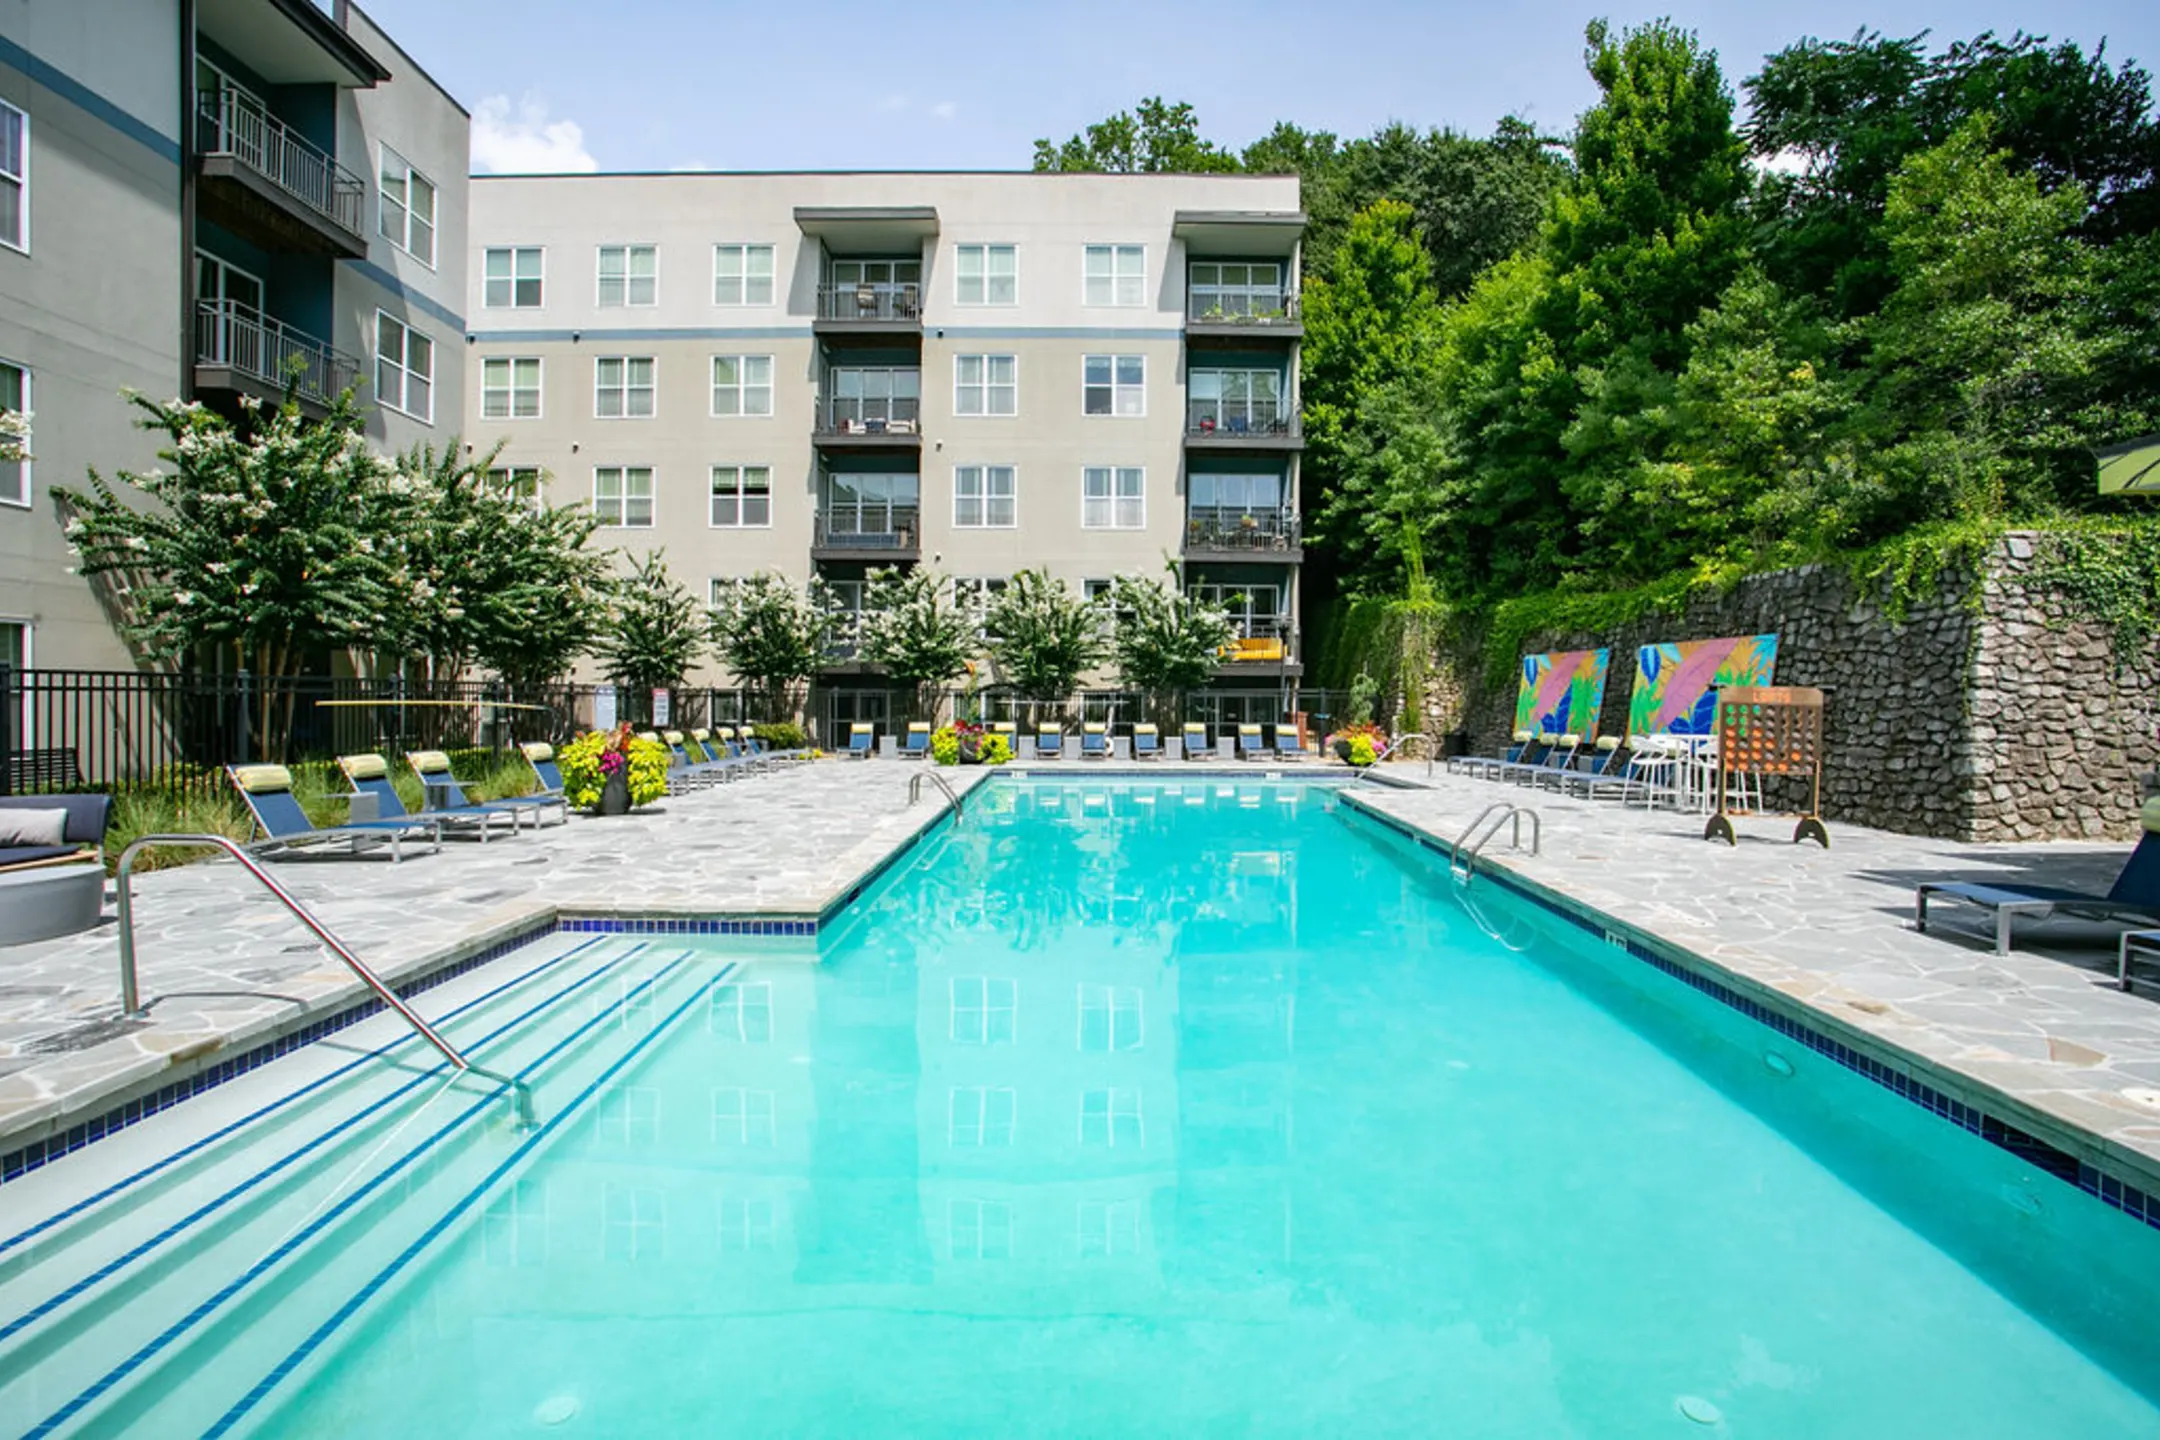 Pool - Glenwood Park Lofts - Atlanta, GA